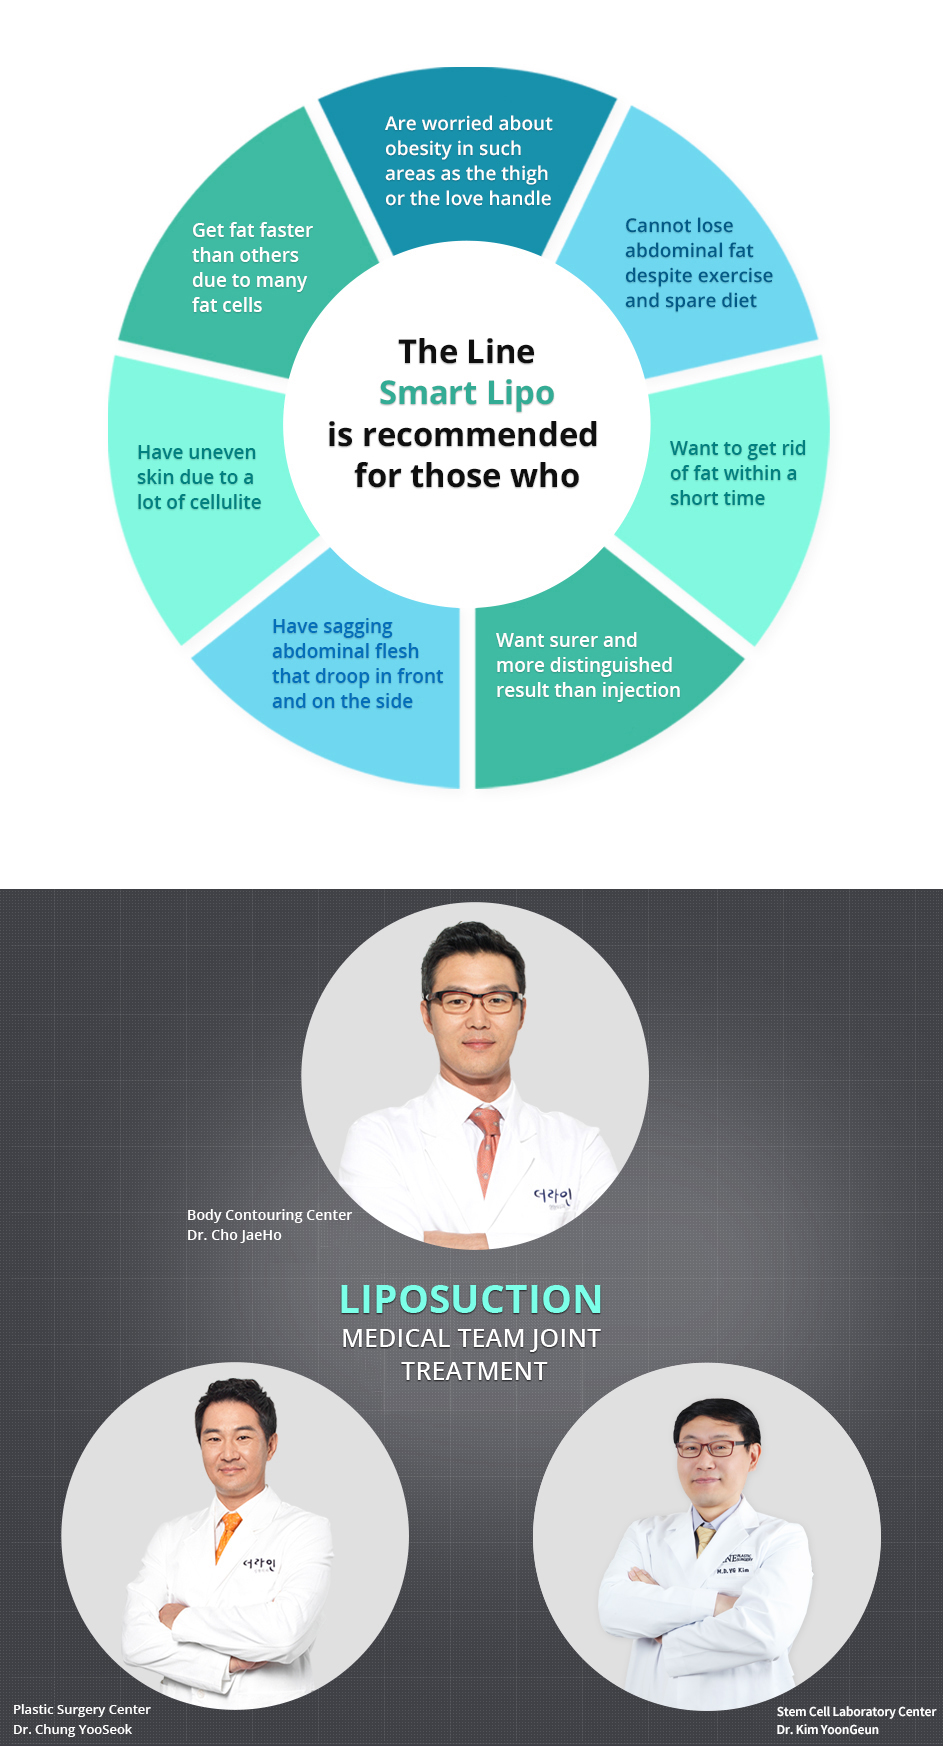 Liposuction medical team joint treatment